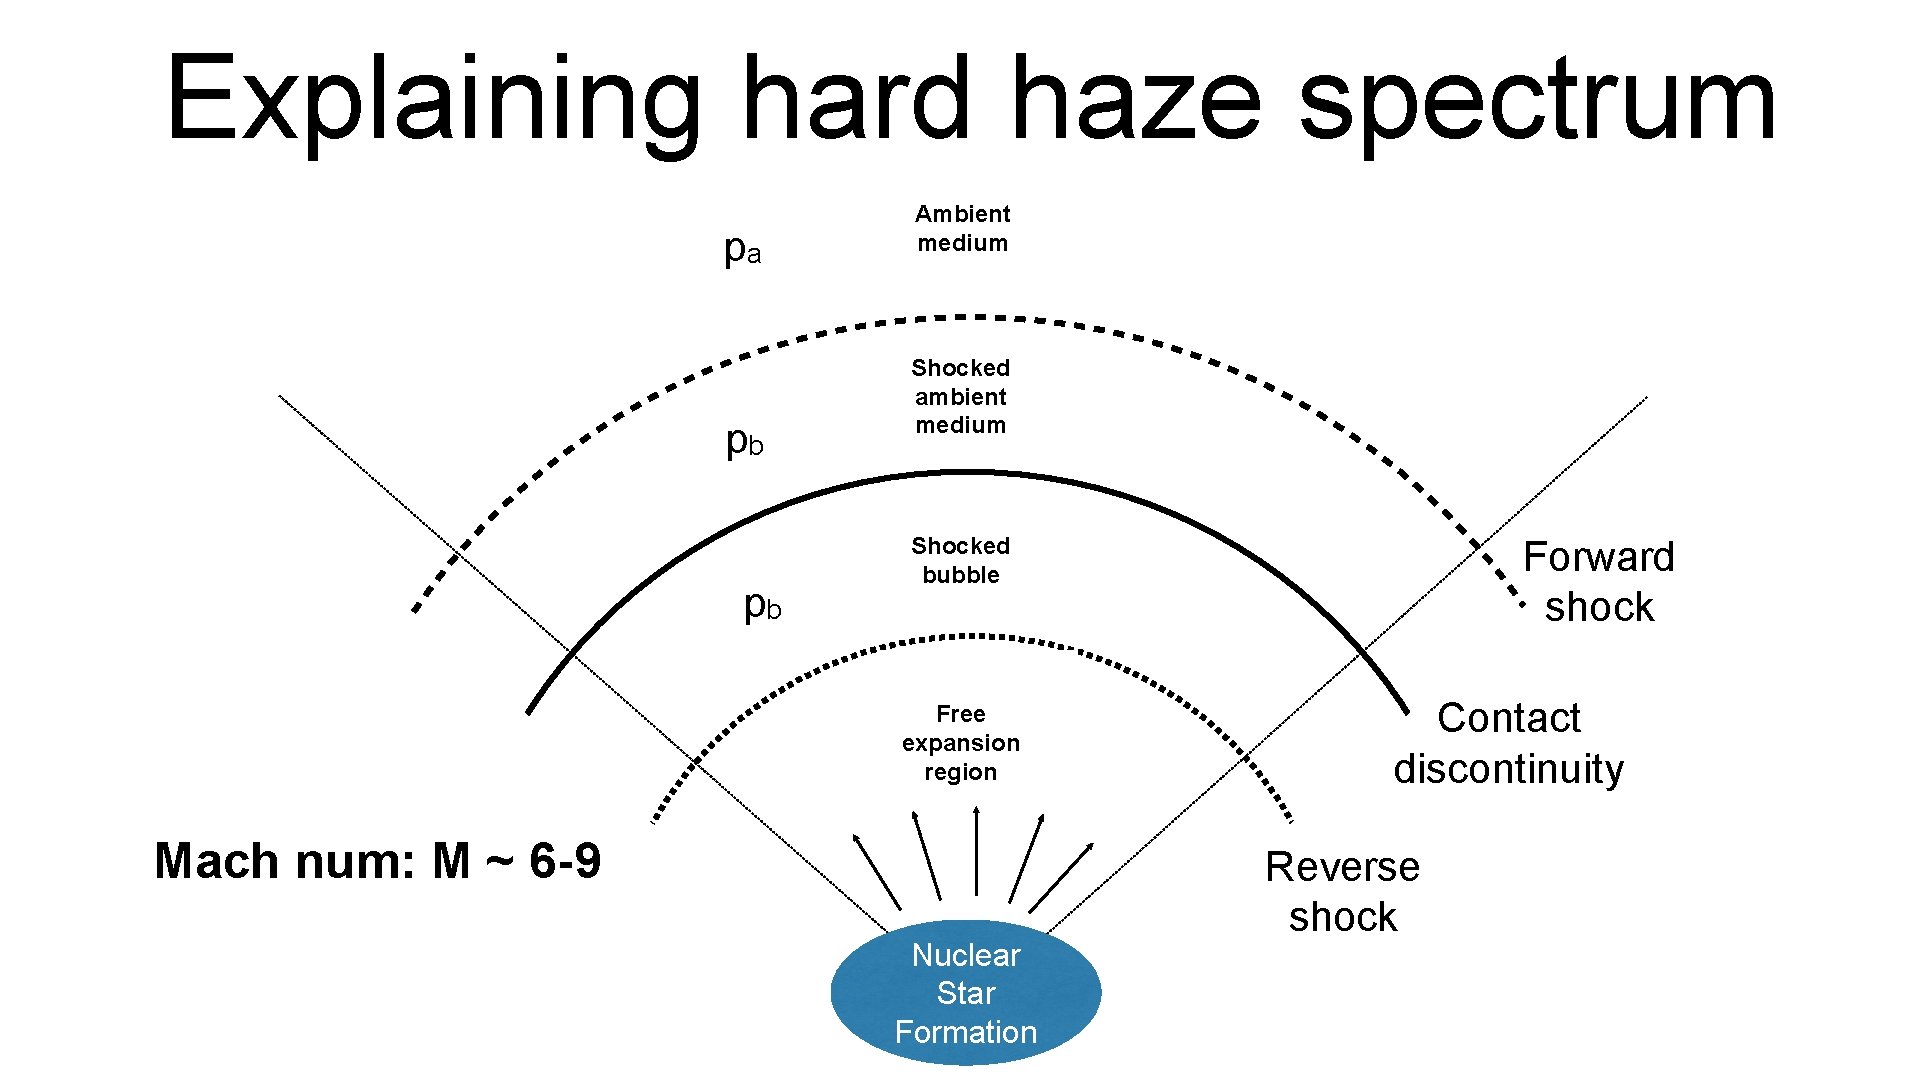 Explaining hard haze spectrum pa pb pb Ambient medium Shocked ambient medium Shocked bubble